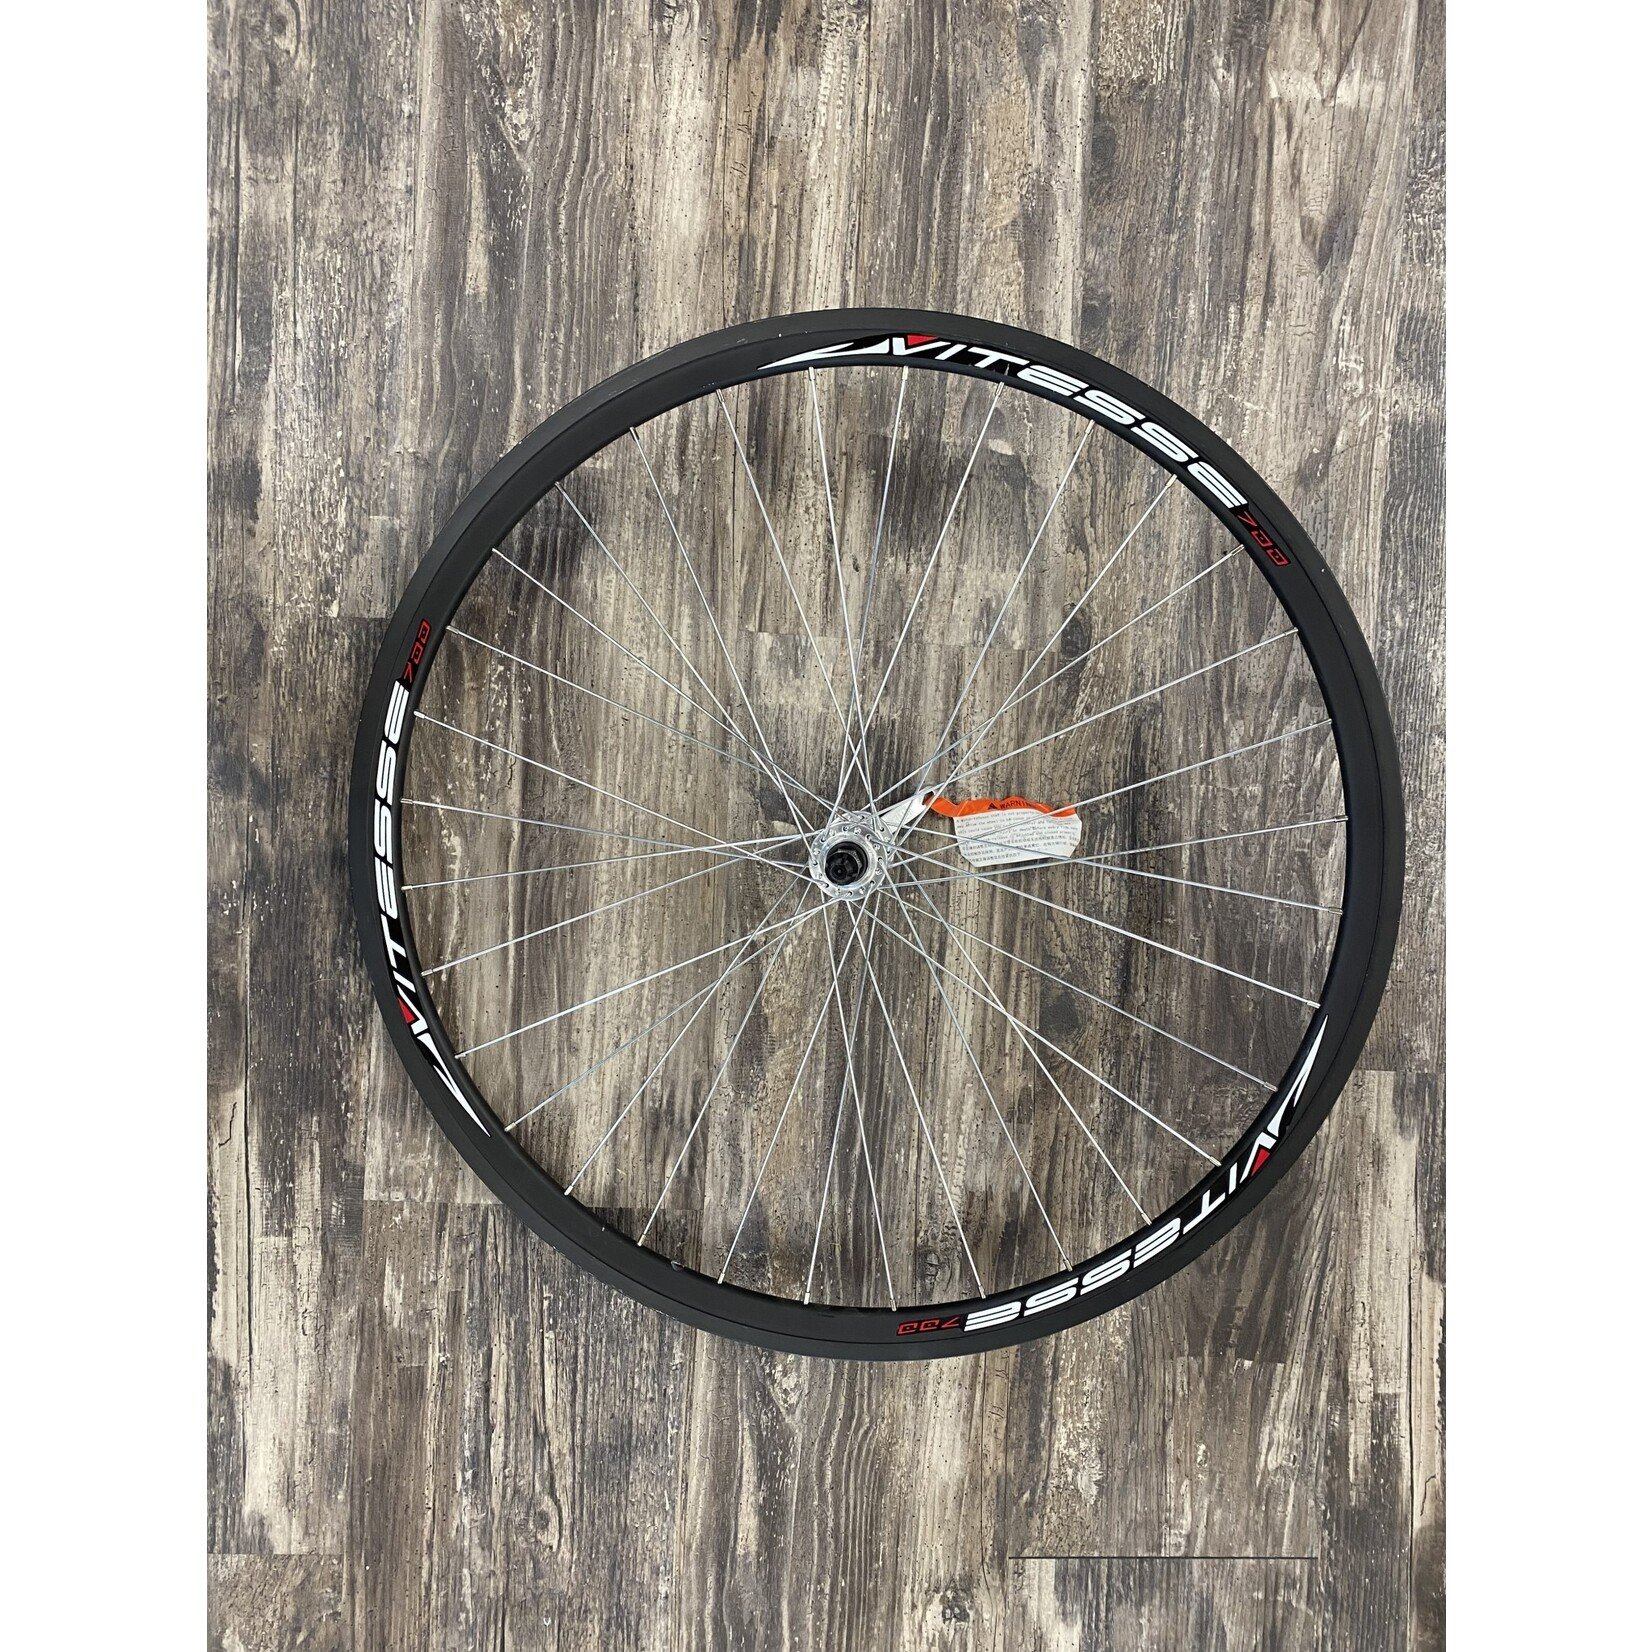 Vitesse 700c Front Bicycle Wheel/Aluminum/Black & Red